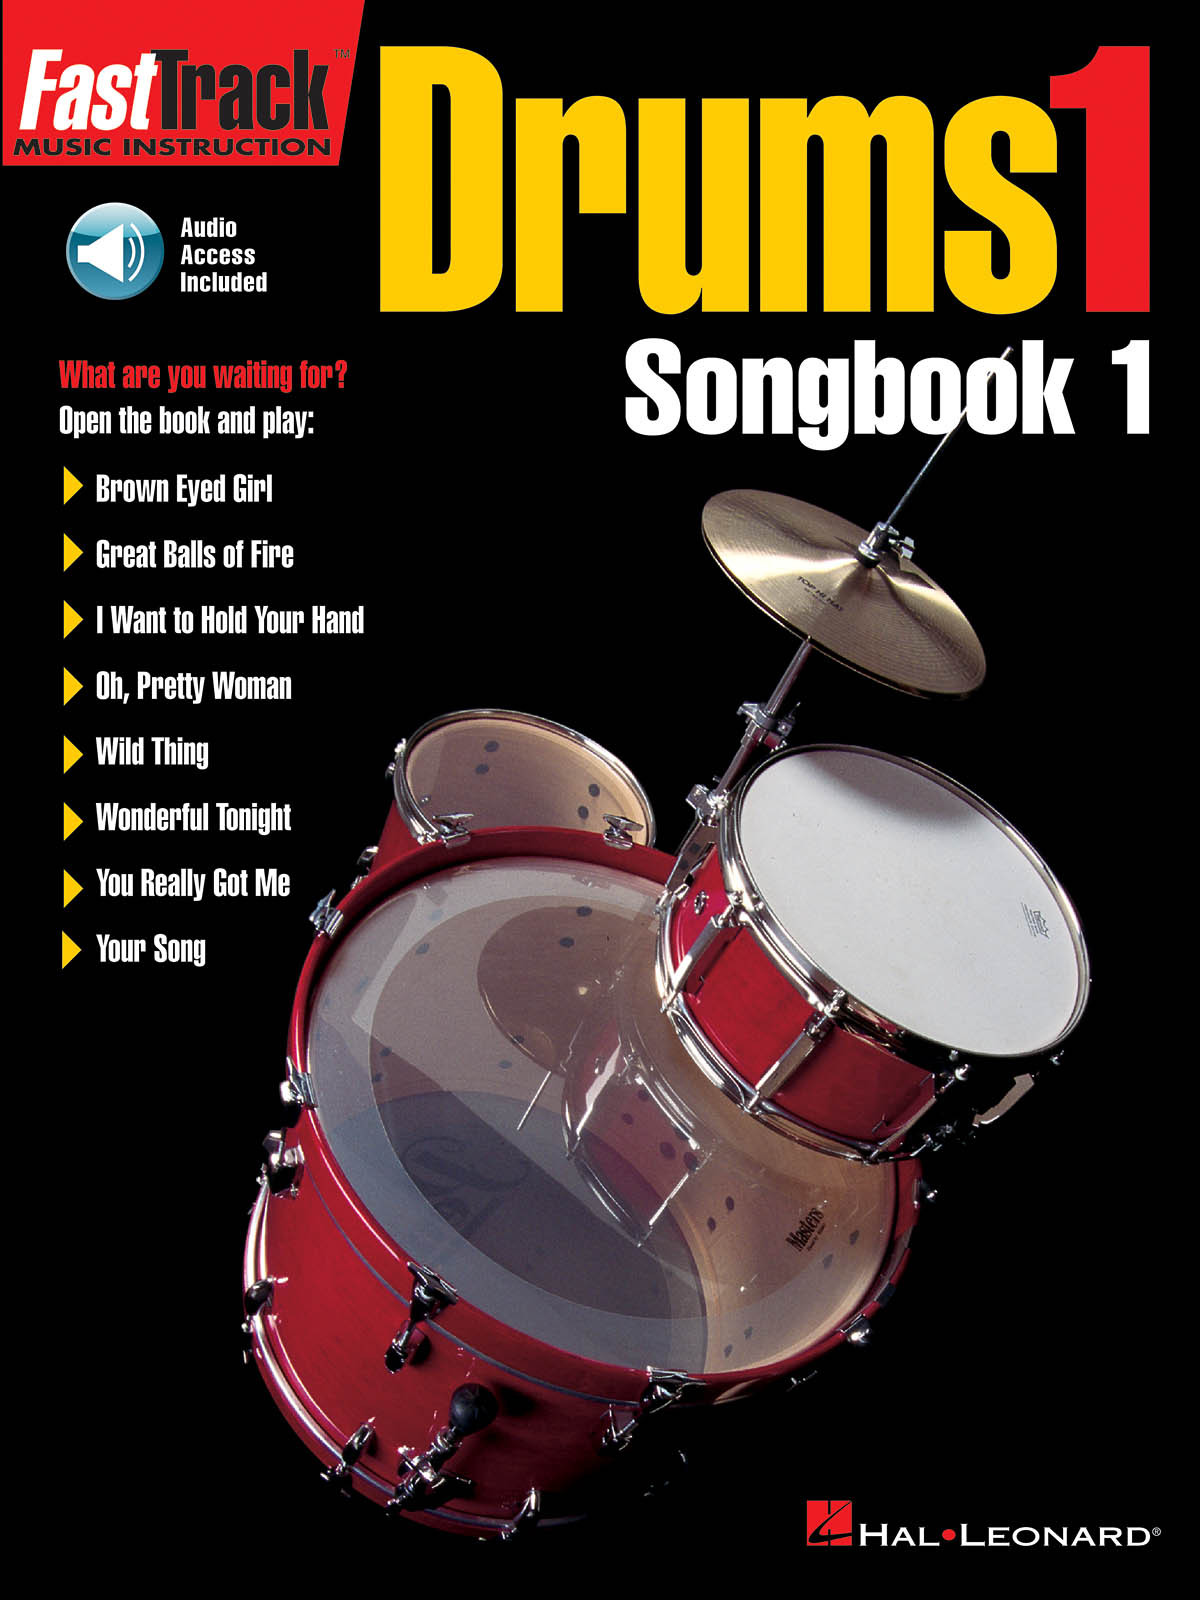 FastTrack Drums Songbook 1